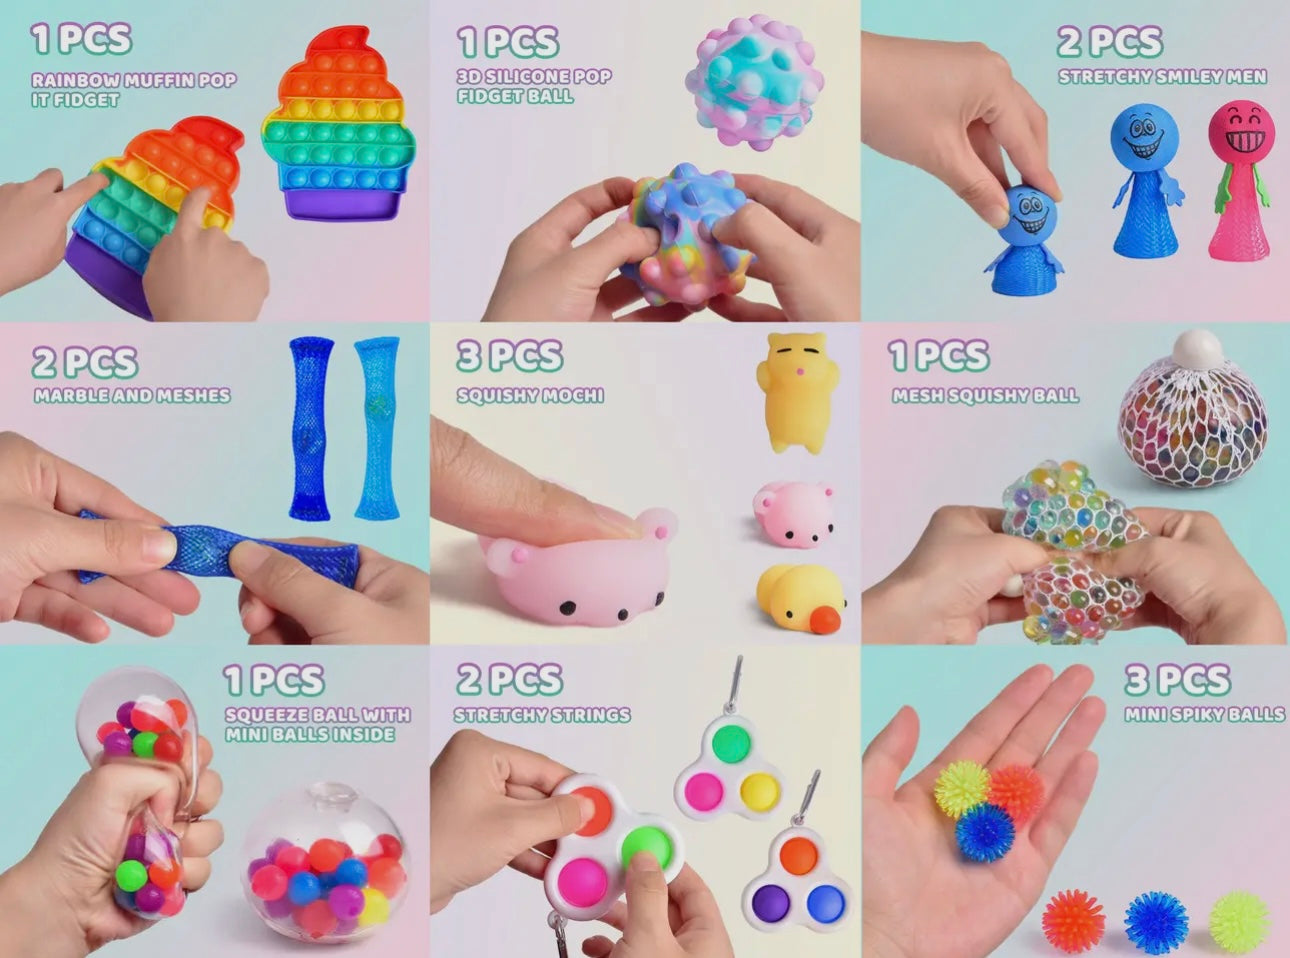 32 Piece Sensory Fidget Toy Set